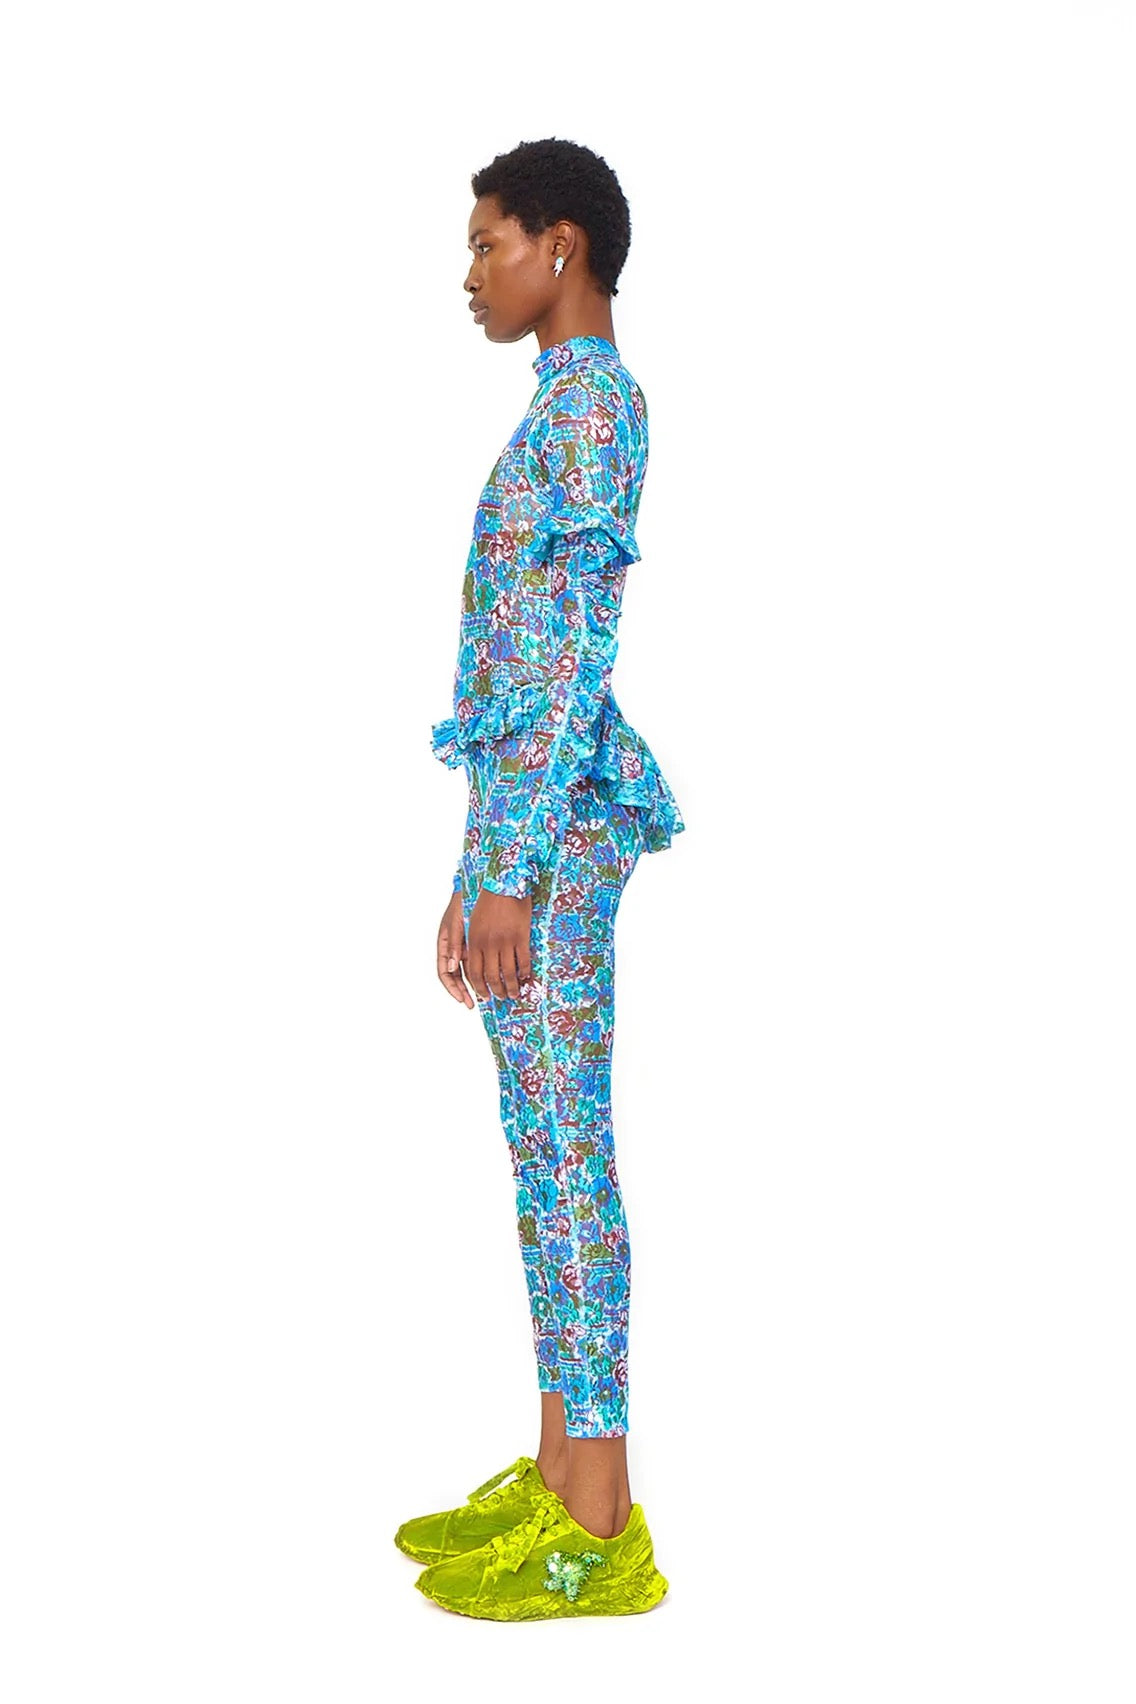 Collina Strada- Ruffle Skirt Bodysuit: Turquoise Flower Stripe